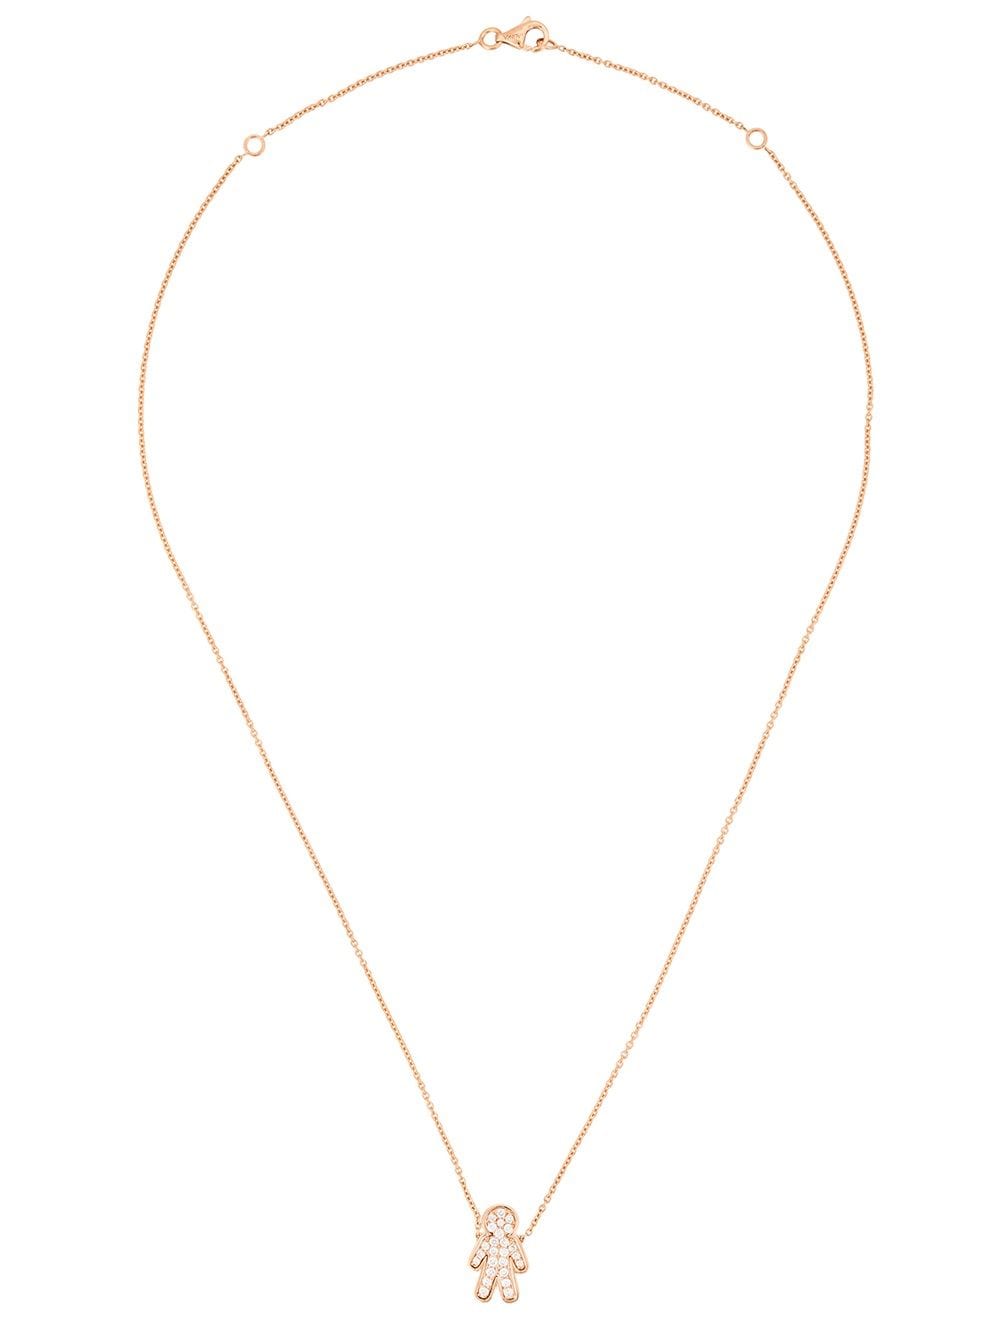 Misha diamond pendant necklace